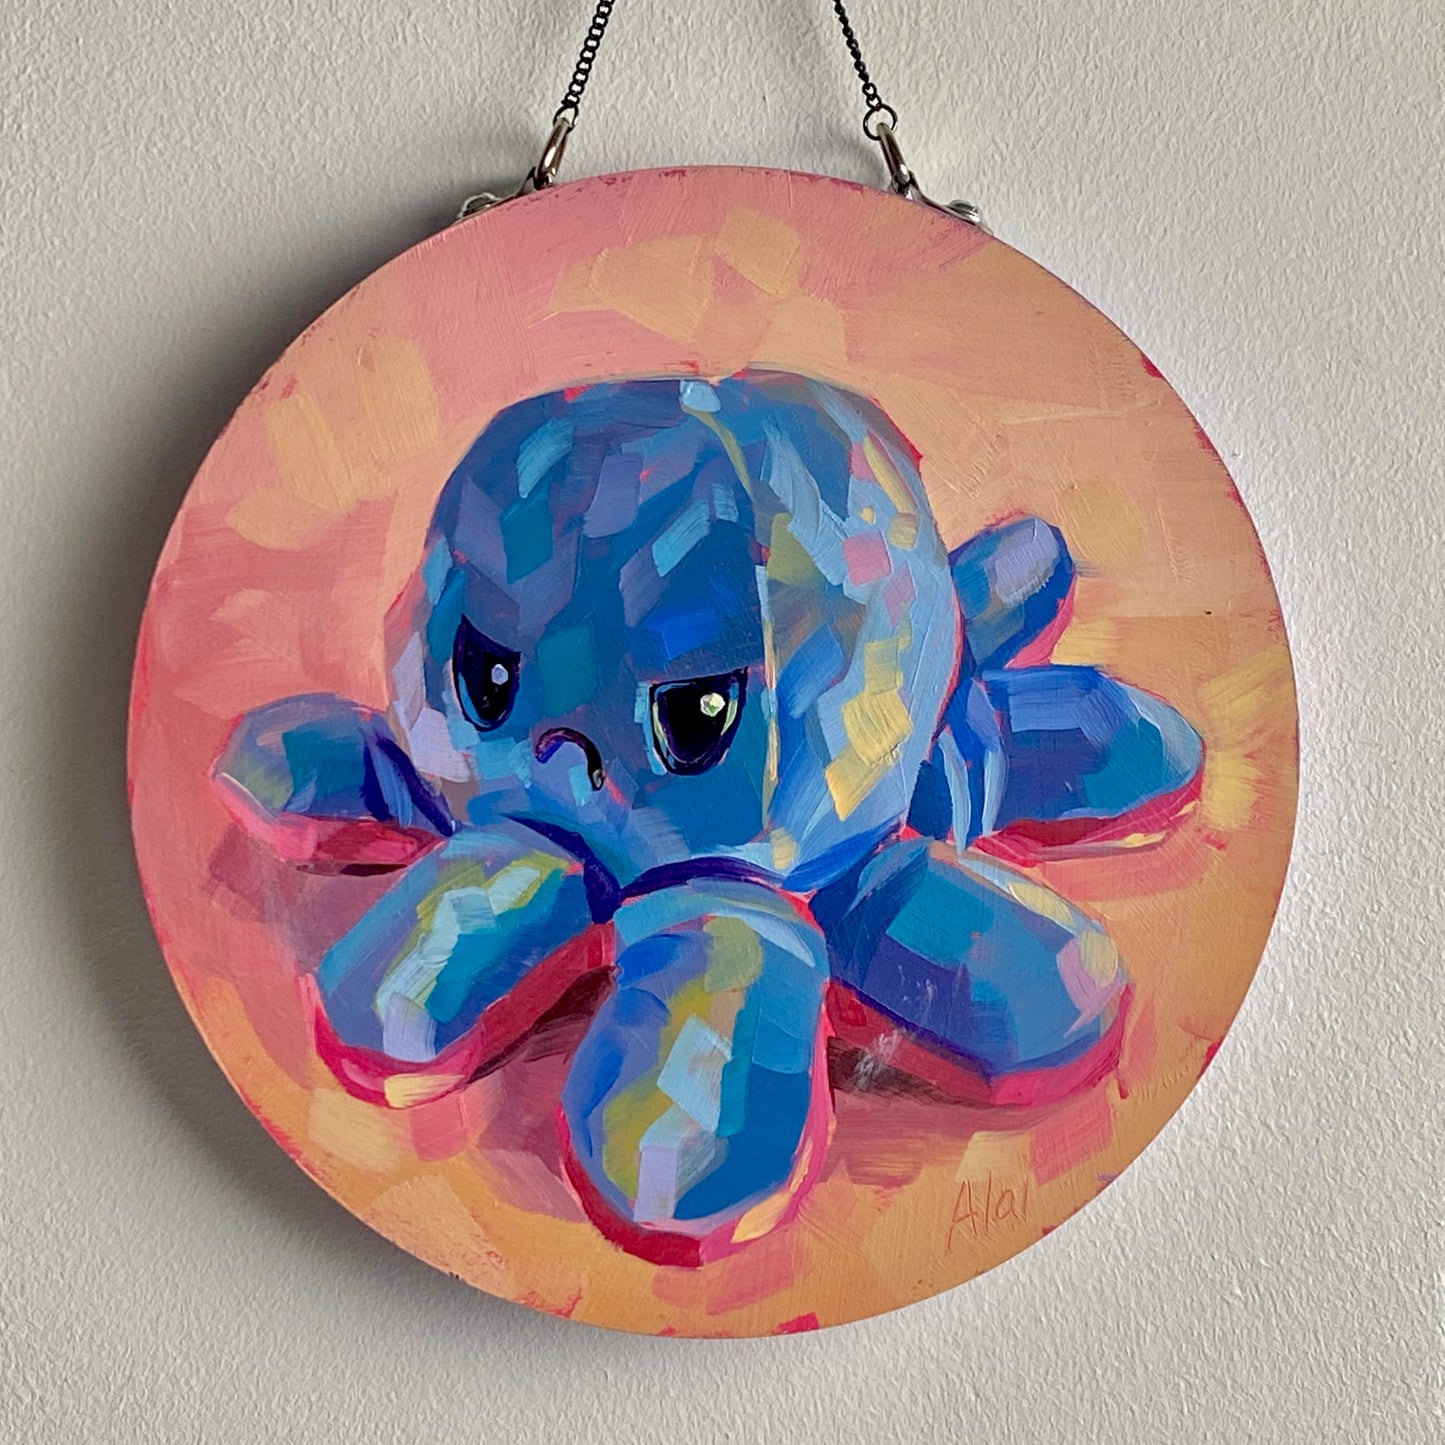 Reversible Original Oil Painting II - Pink/Blue Octoplushie